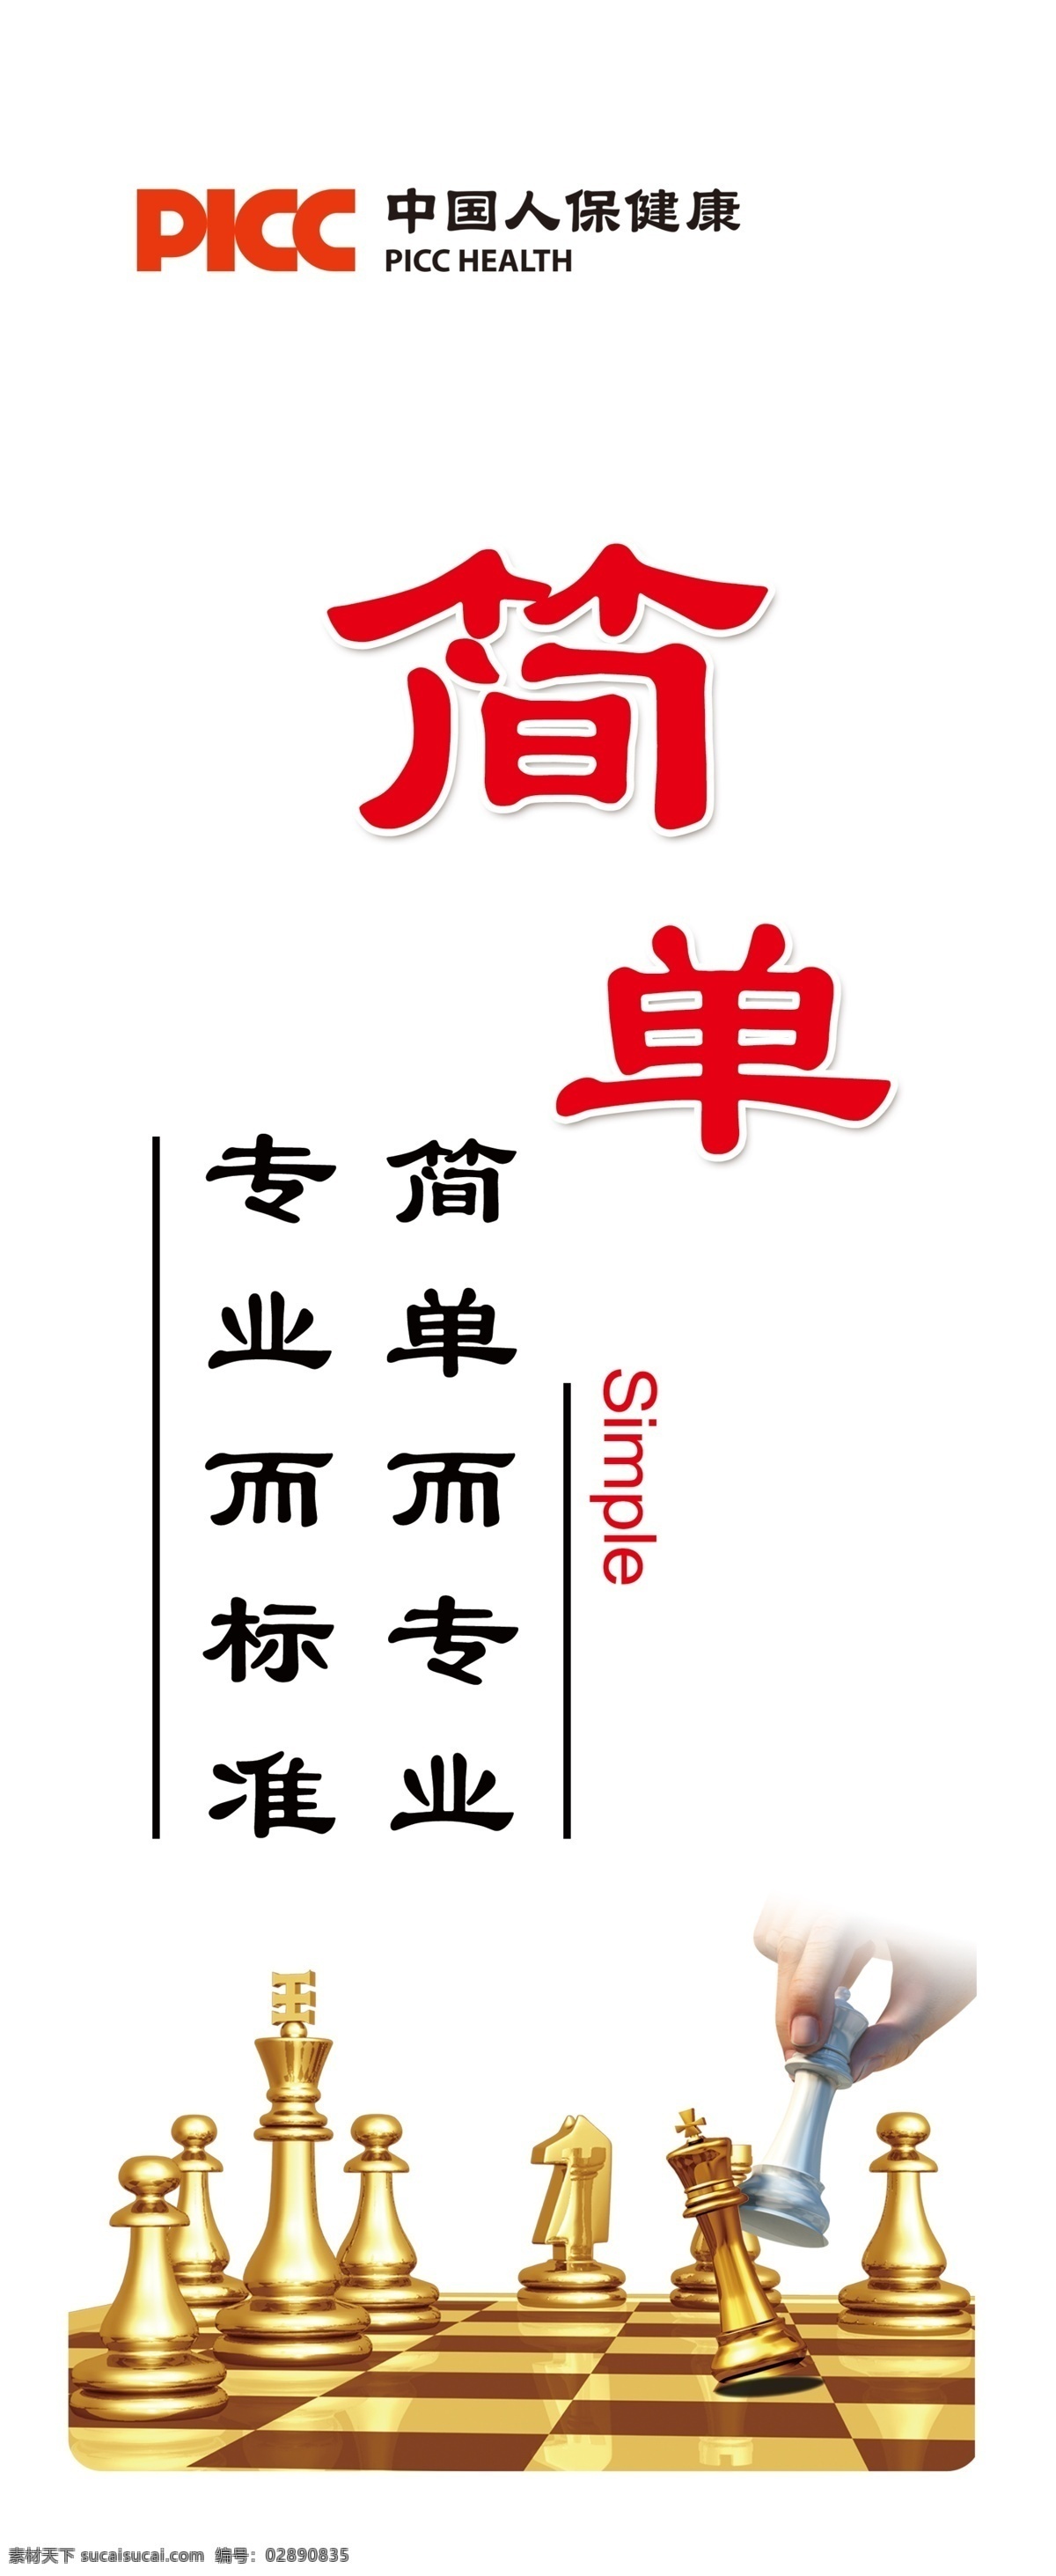 picc 中国人保 健康 保险 企业文化 上墙牌 简单 棋 国际象棋 下棋 简洁 大气 logo 分层